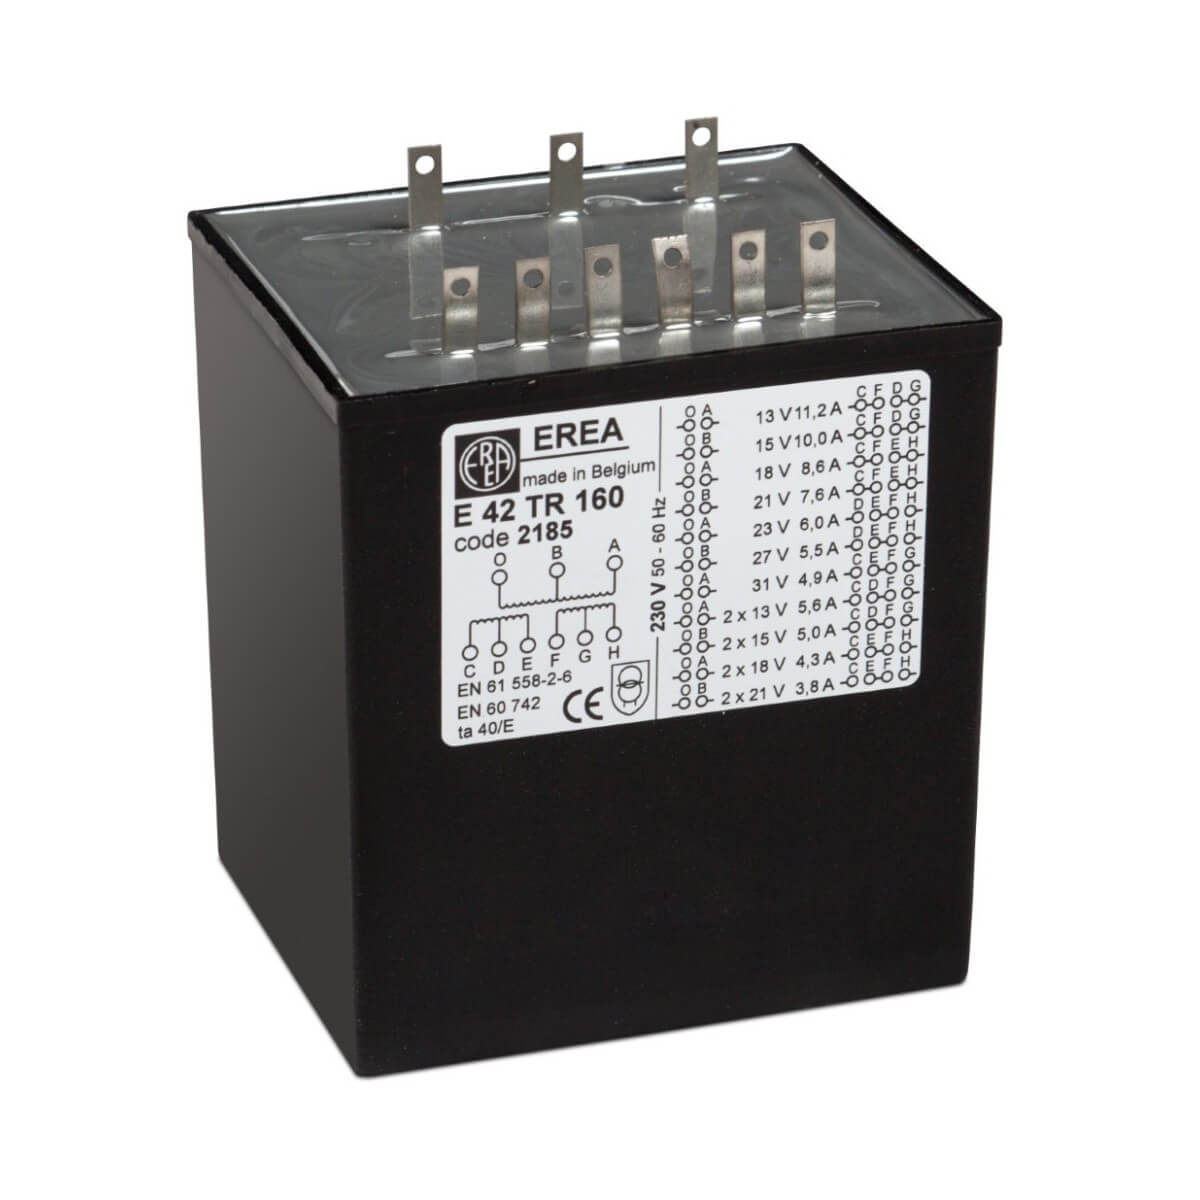 EREA 1 phase isolating transformer for electronic applications 230V/Us Multi-voltage 160VA E 42TR160